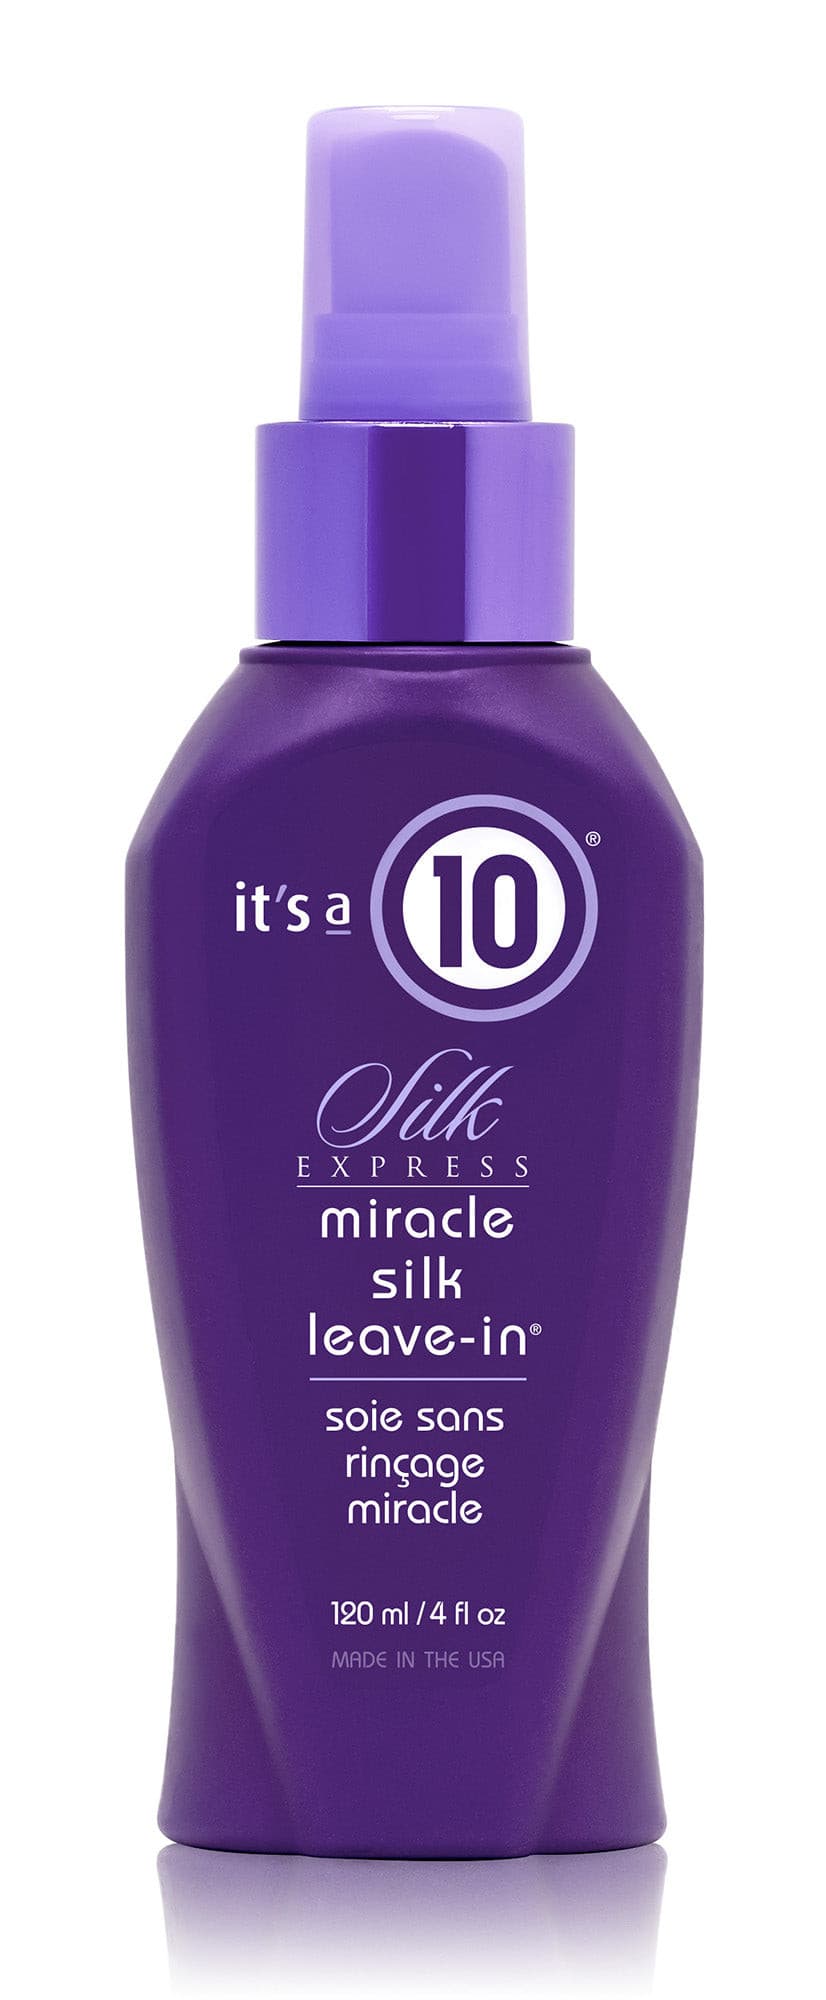 It's a 10 Miracle Leave in Lite Spray - 4 fl oz bottle